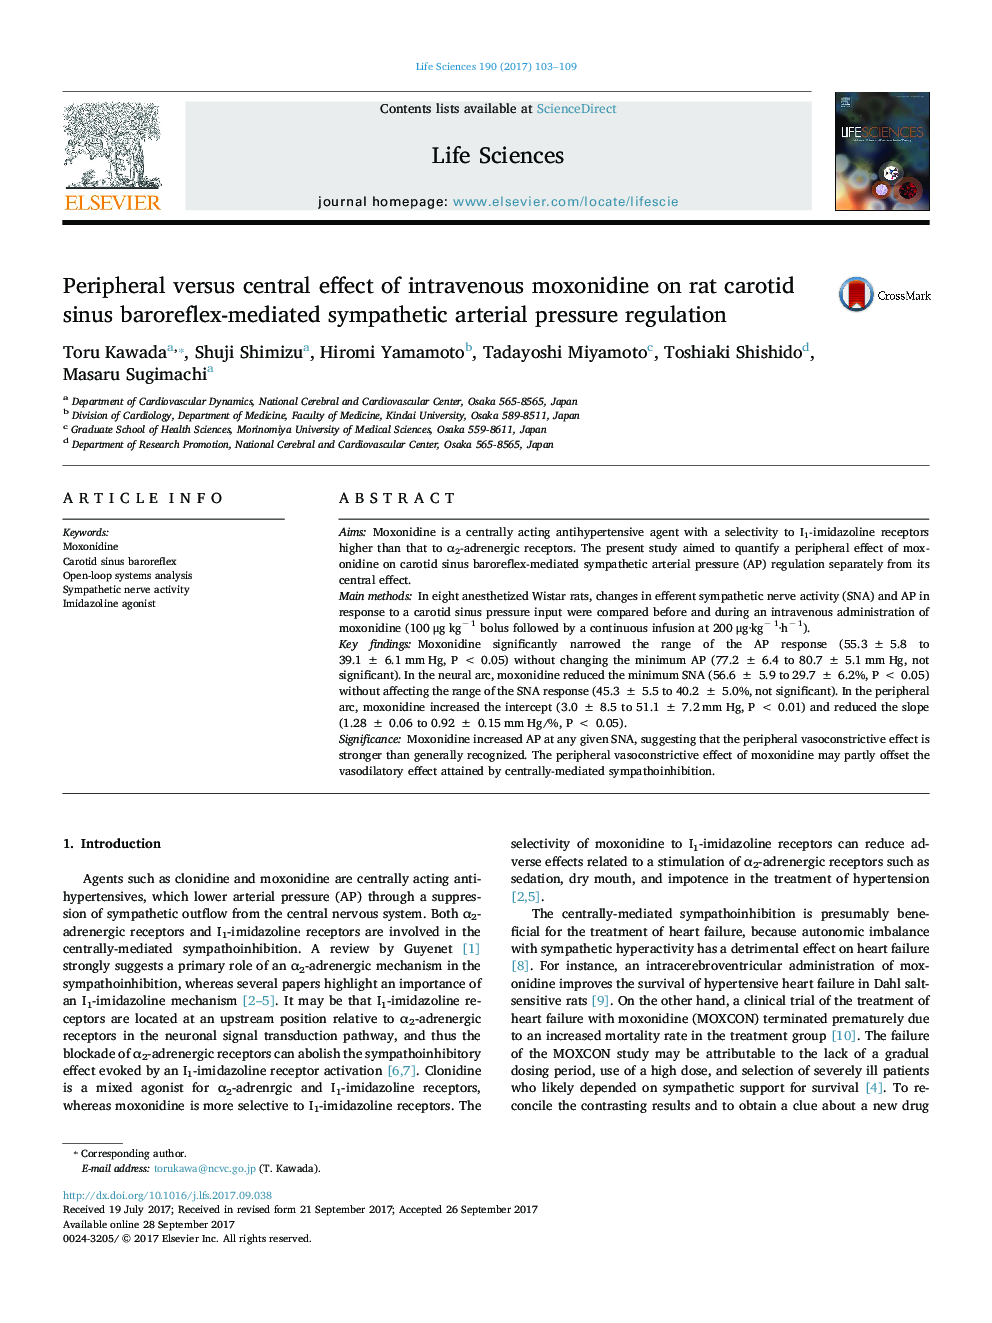 Peripheral versus central effect of intravenous moxonidine on rat carotid sinus baroreflex-mediated sympathetic arterial pressure regulation